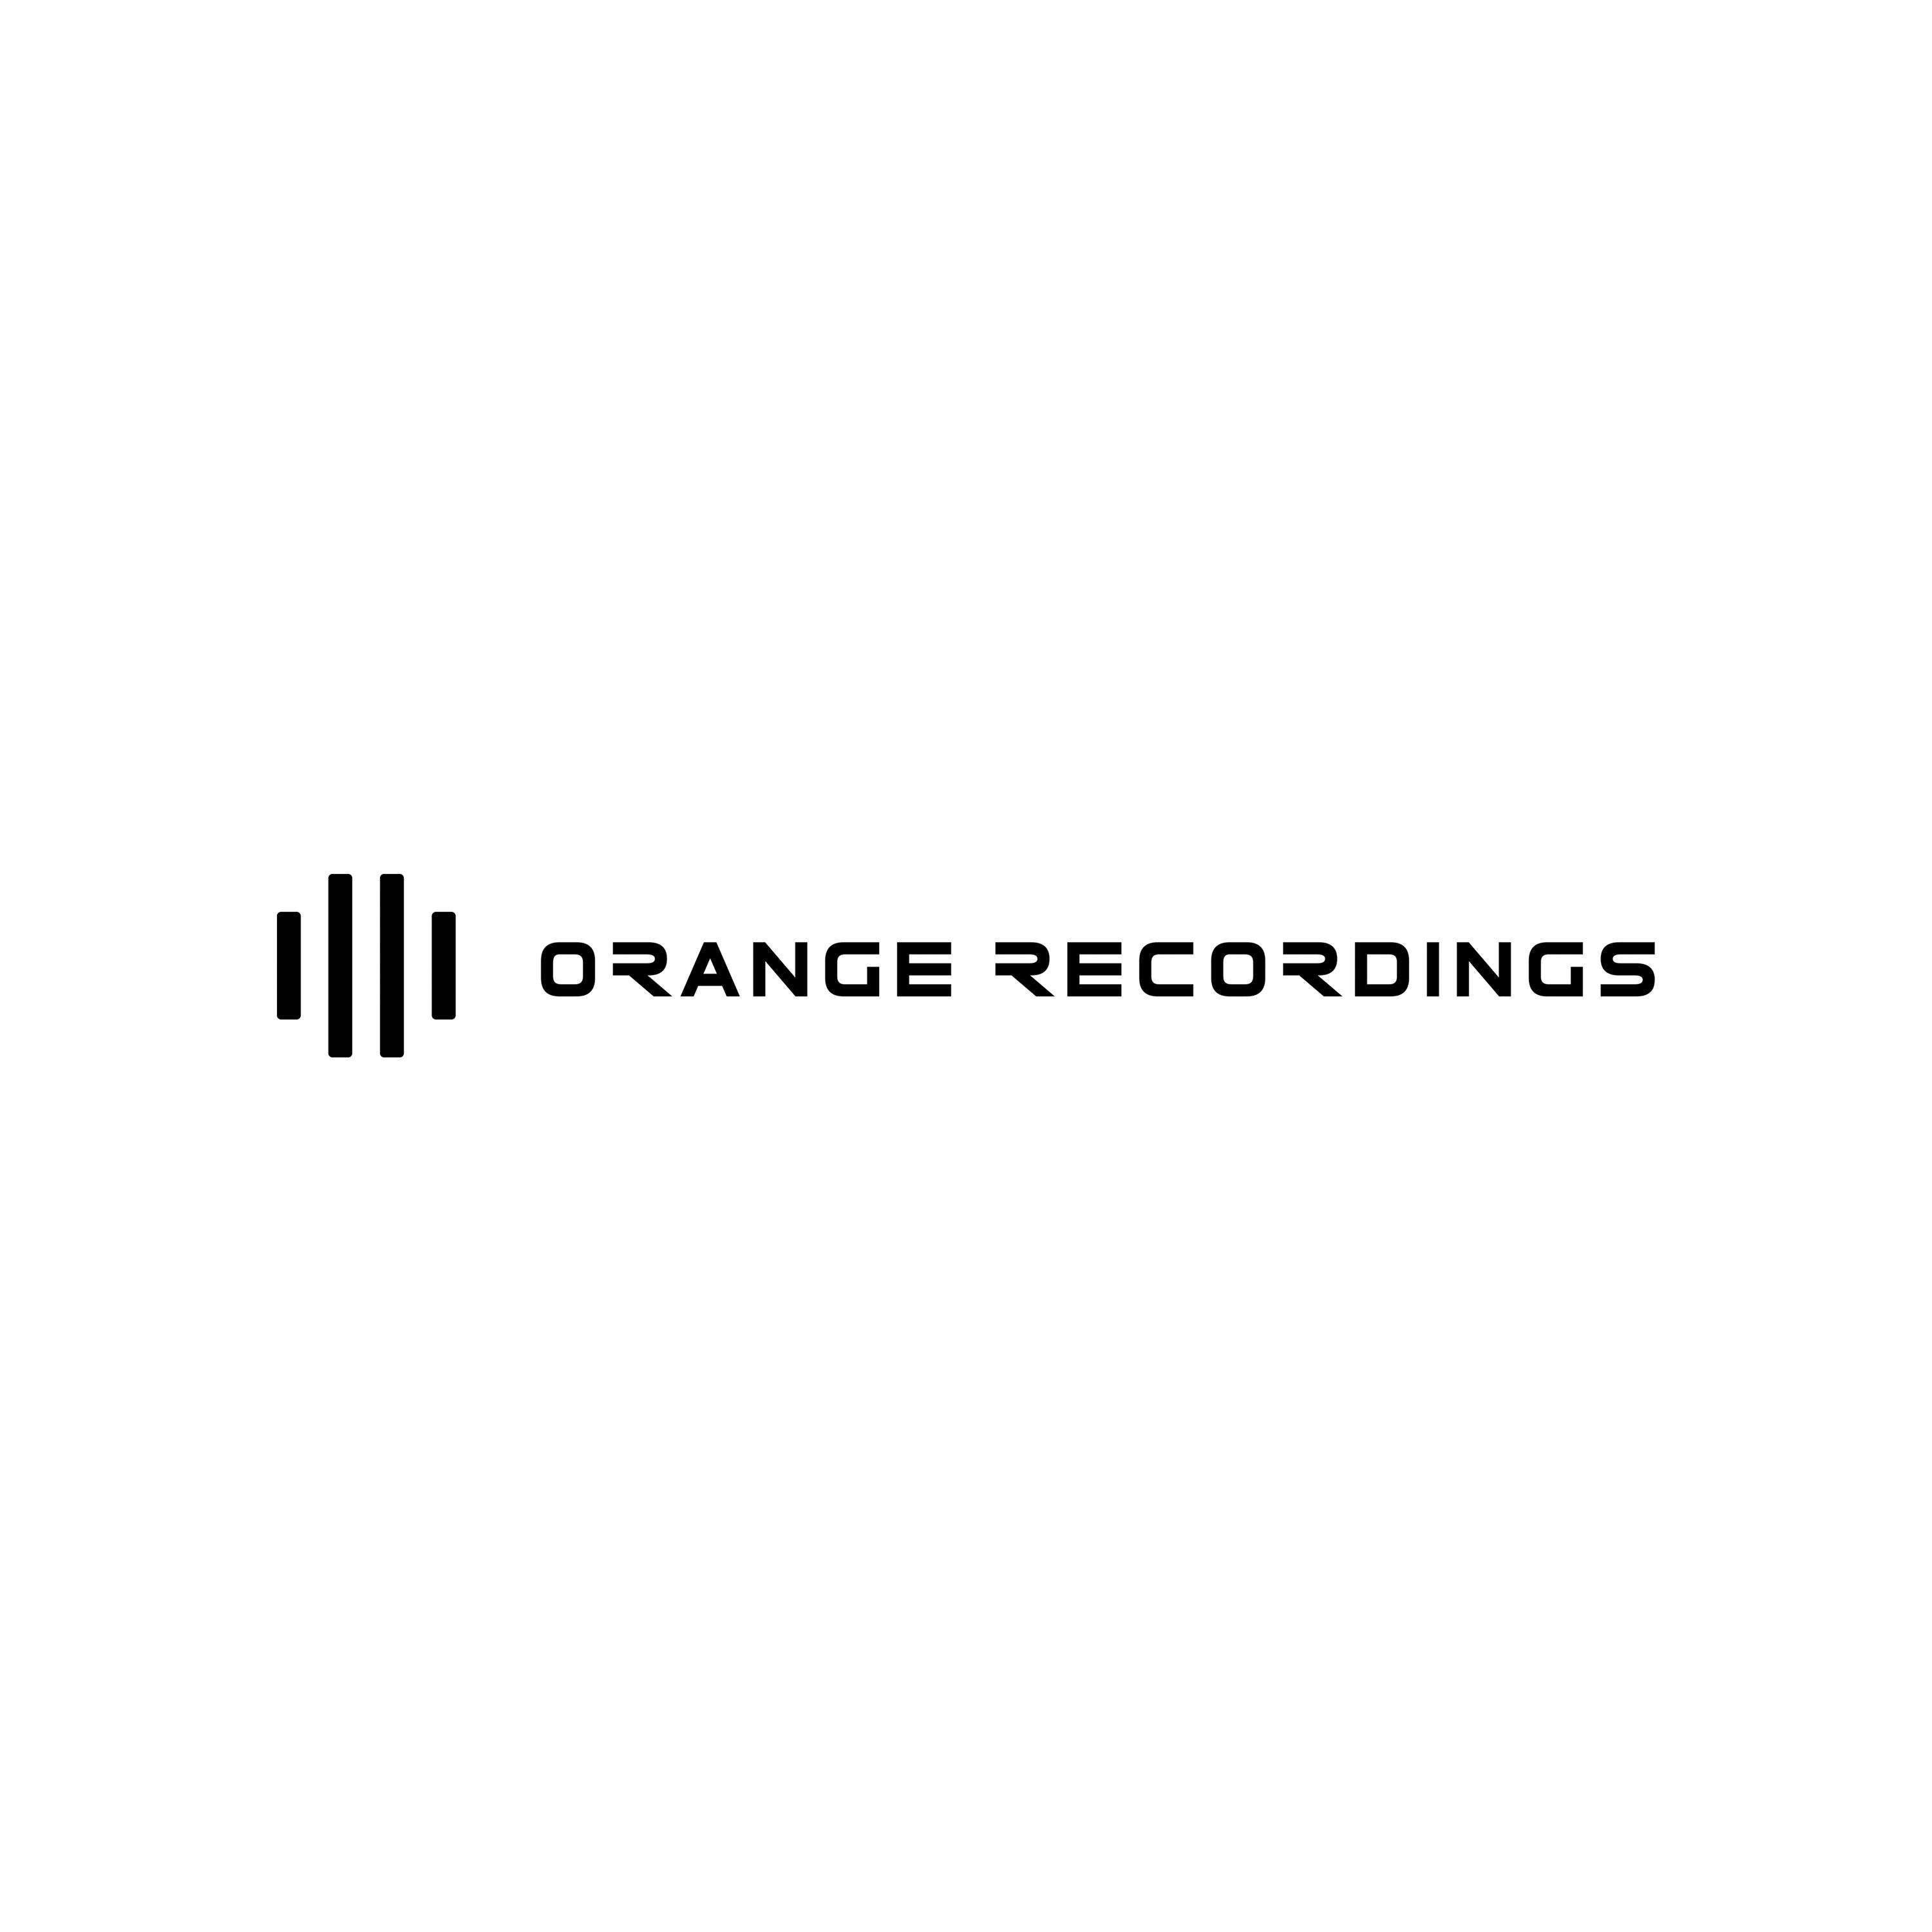 Orange Recordings site-images/2141401089/b115566b5a82993d00d763aa5eb49f2b/orange-recordings-logo.jpg